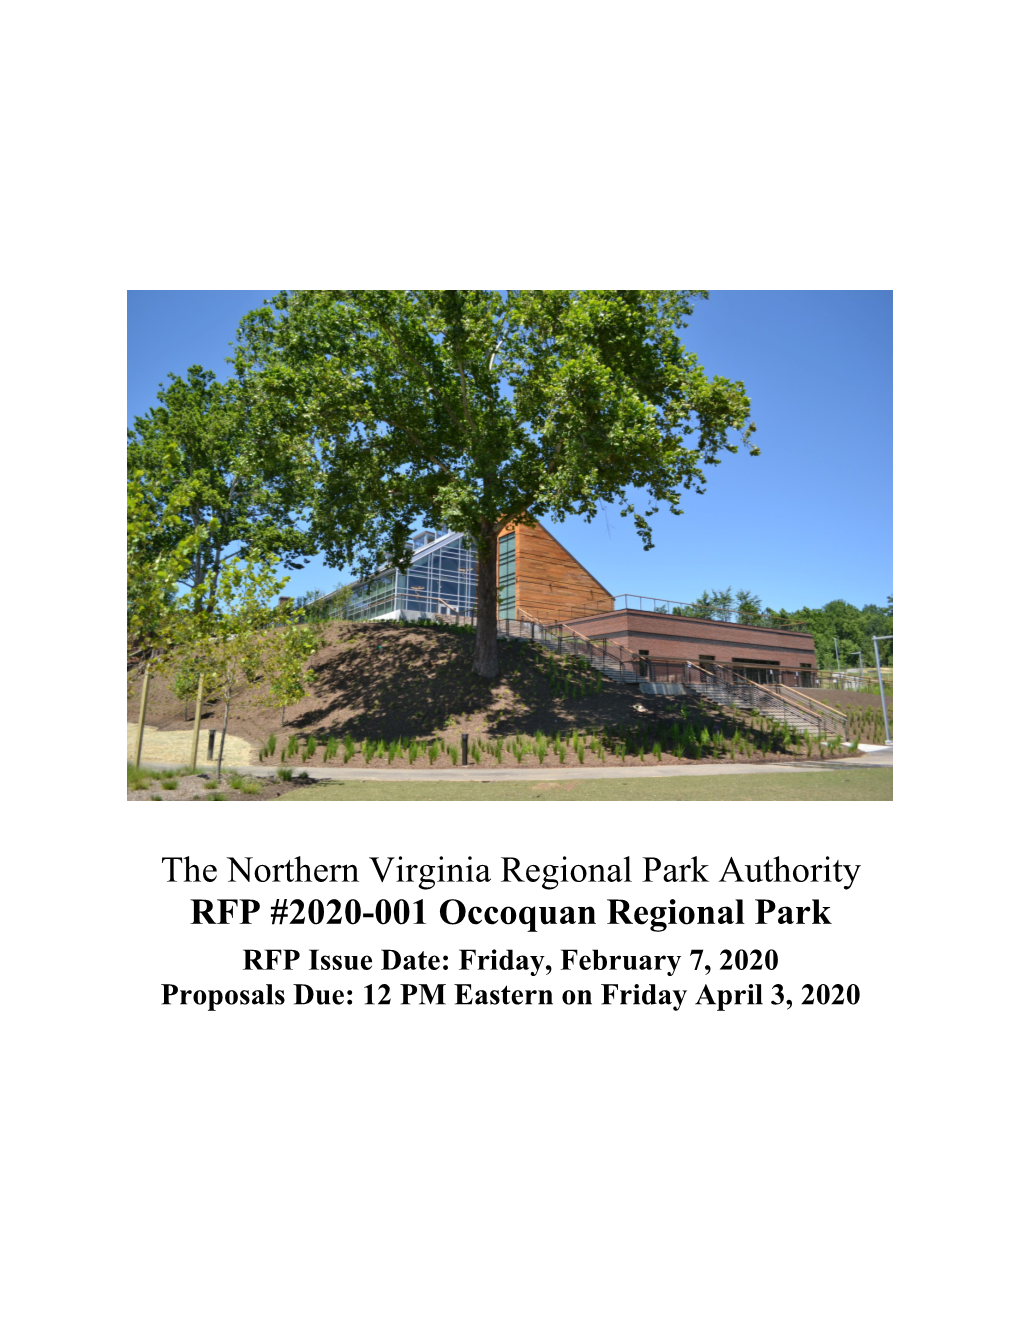 The Northern Virginia Regional Park Authority RFP #2020-001